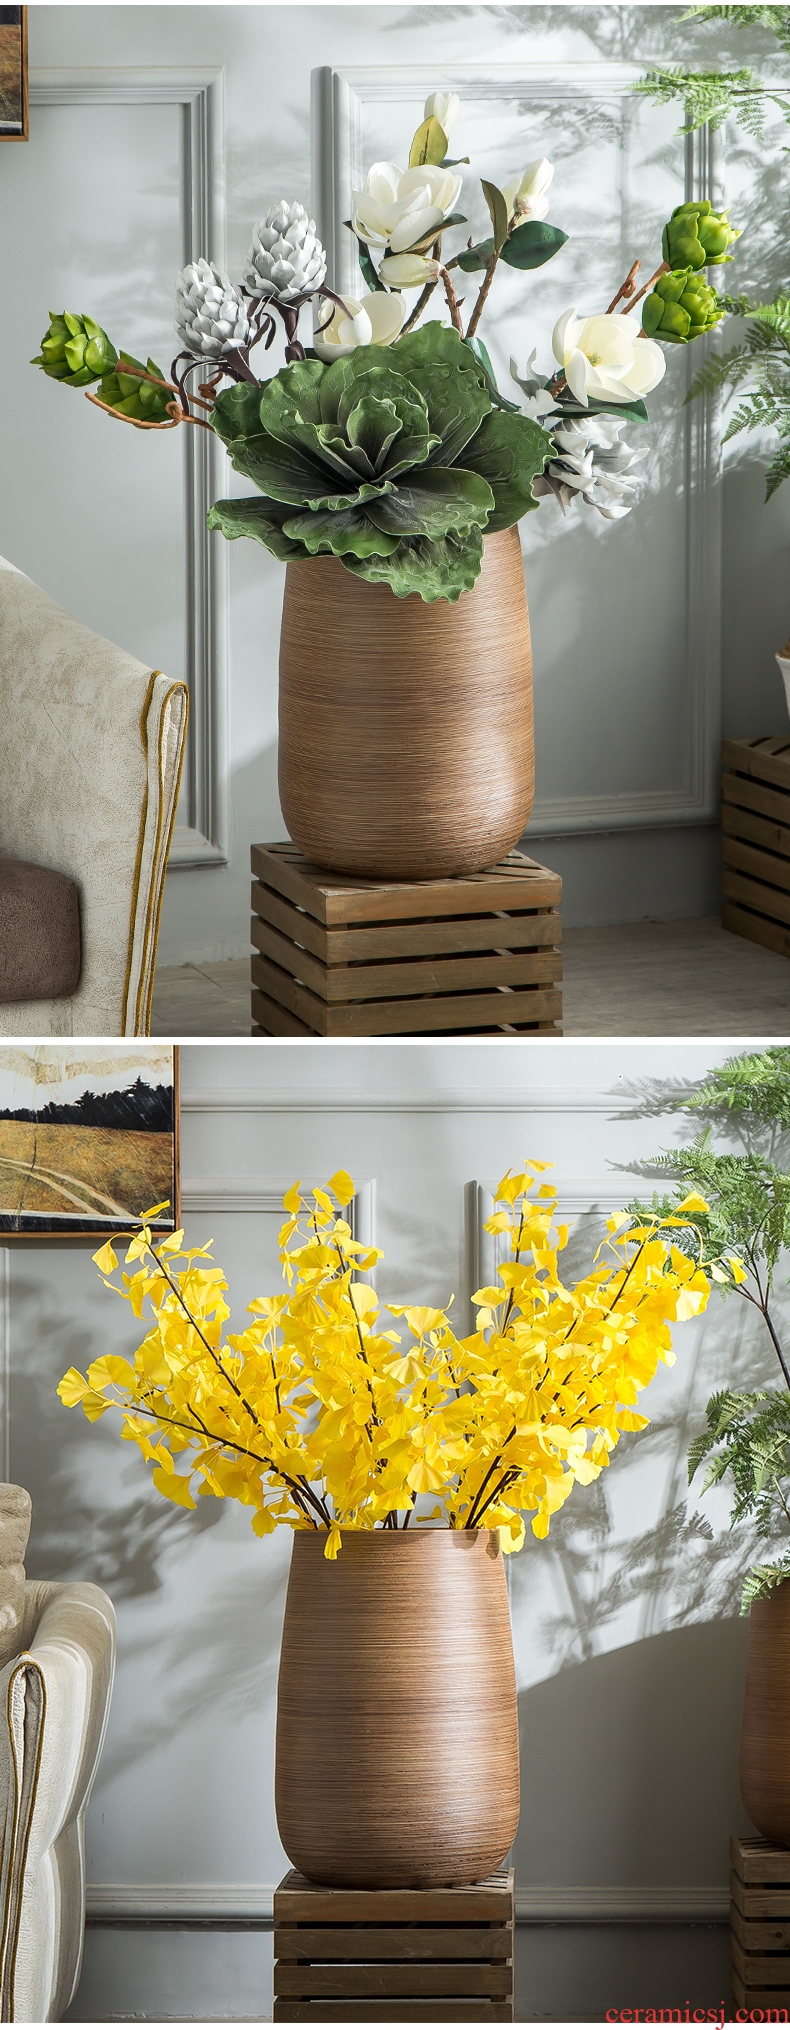 American light key-2 luxury new Chinese golden flower arranging large ceramic floor vase modern hotel home sitting room porch decoration - 598527113997